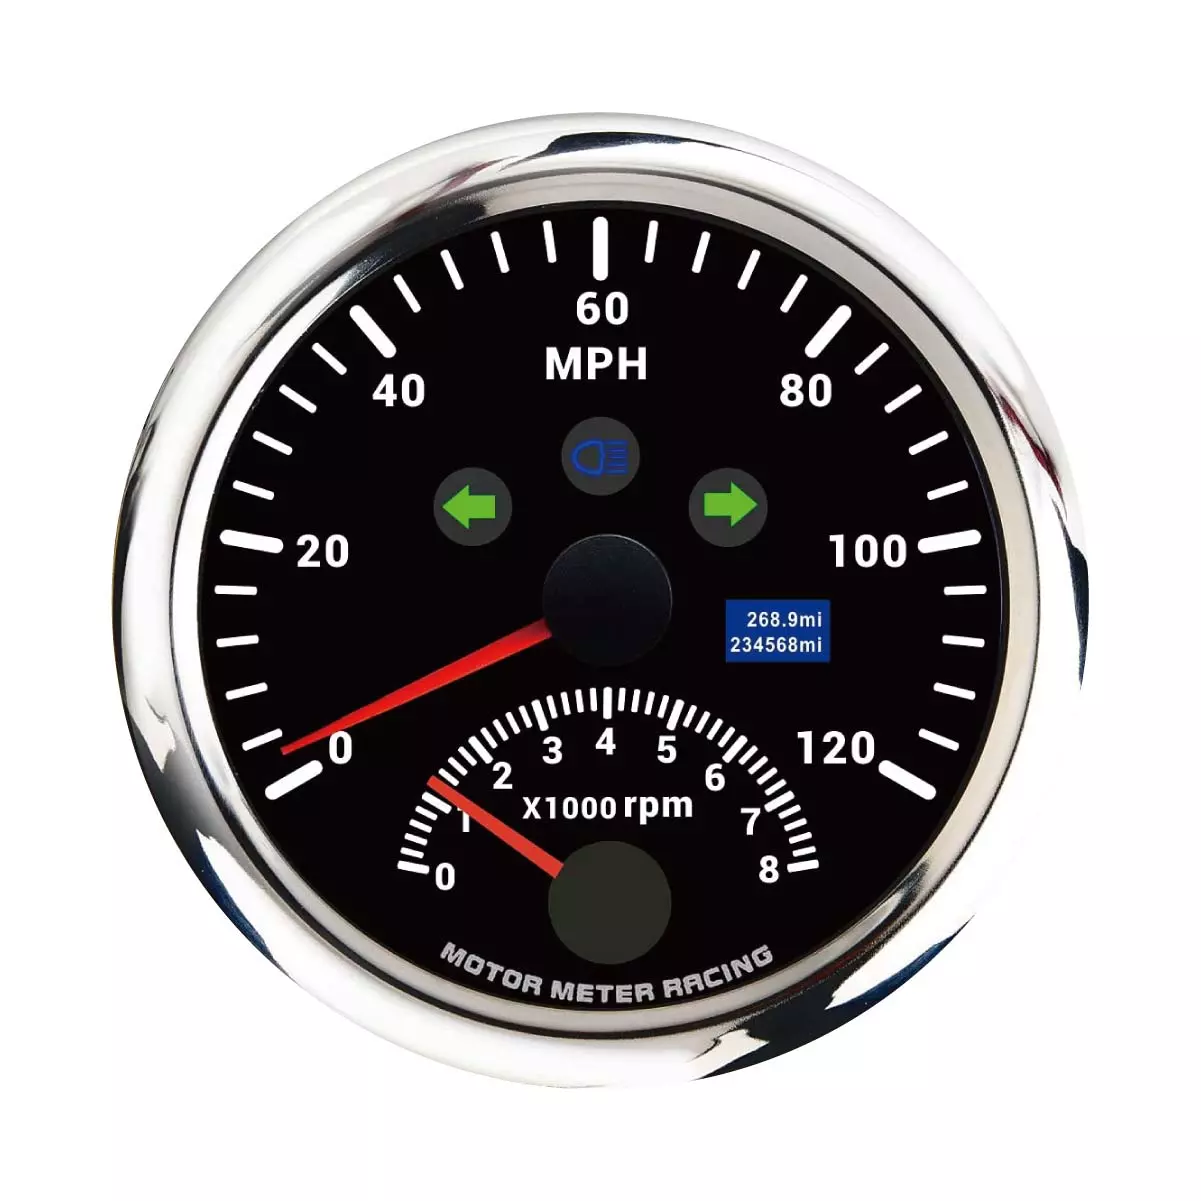 MOTER Meter Racing 3-3/8" 85mm Universal GPS Speedometer with Tachometer 120 MPH 8000 RPM Black Dial for Car Motorcycle ATV UTV High Beam Turn Signal Mileage 9-32V LED Backlit GPS Sensor Included